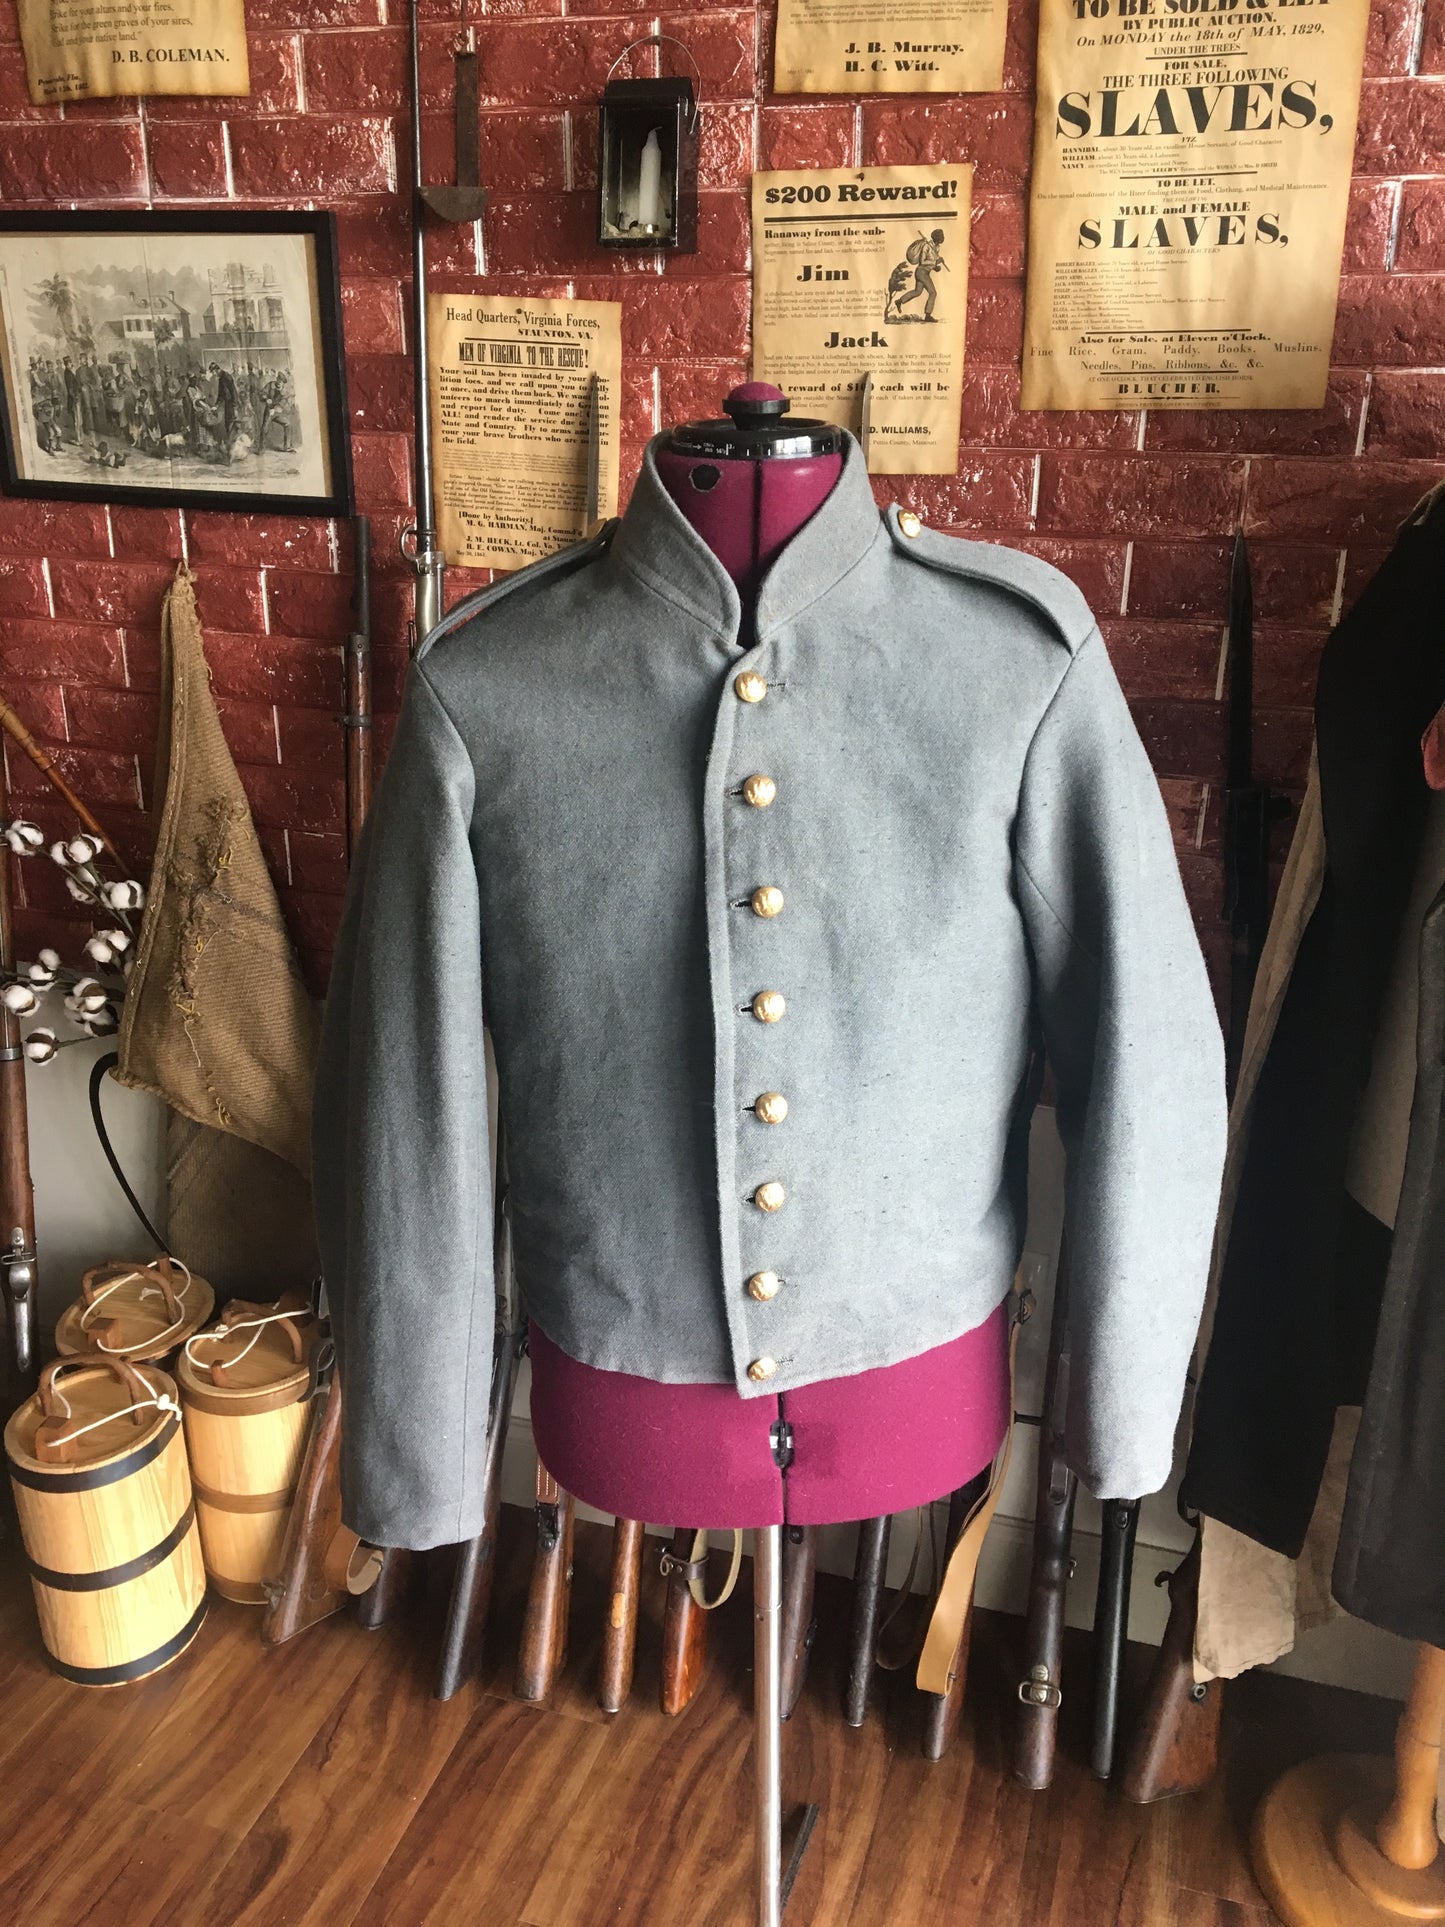 Richmond Clothing Bureau Jacket 1862-1863 Adler Variant